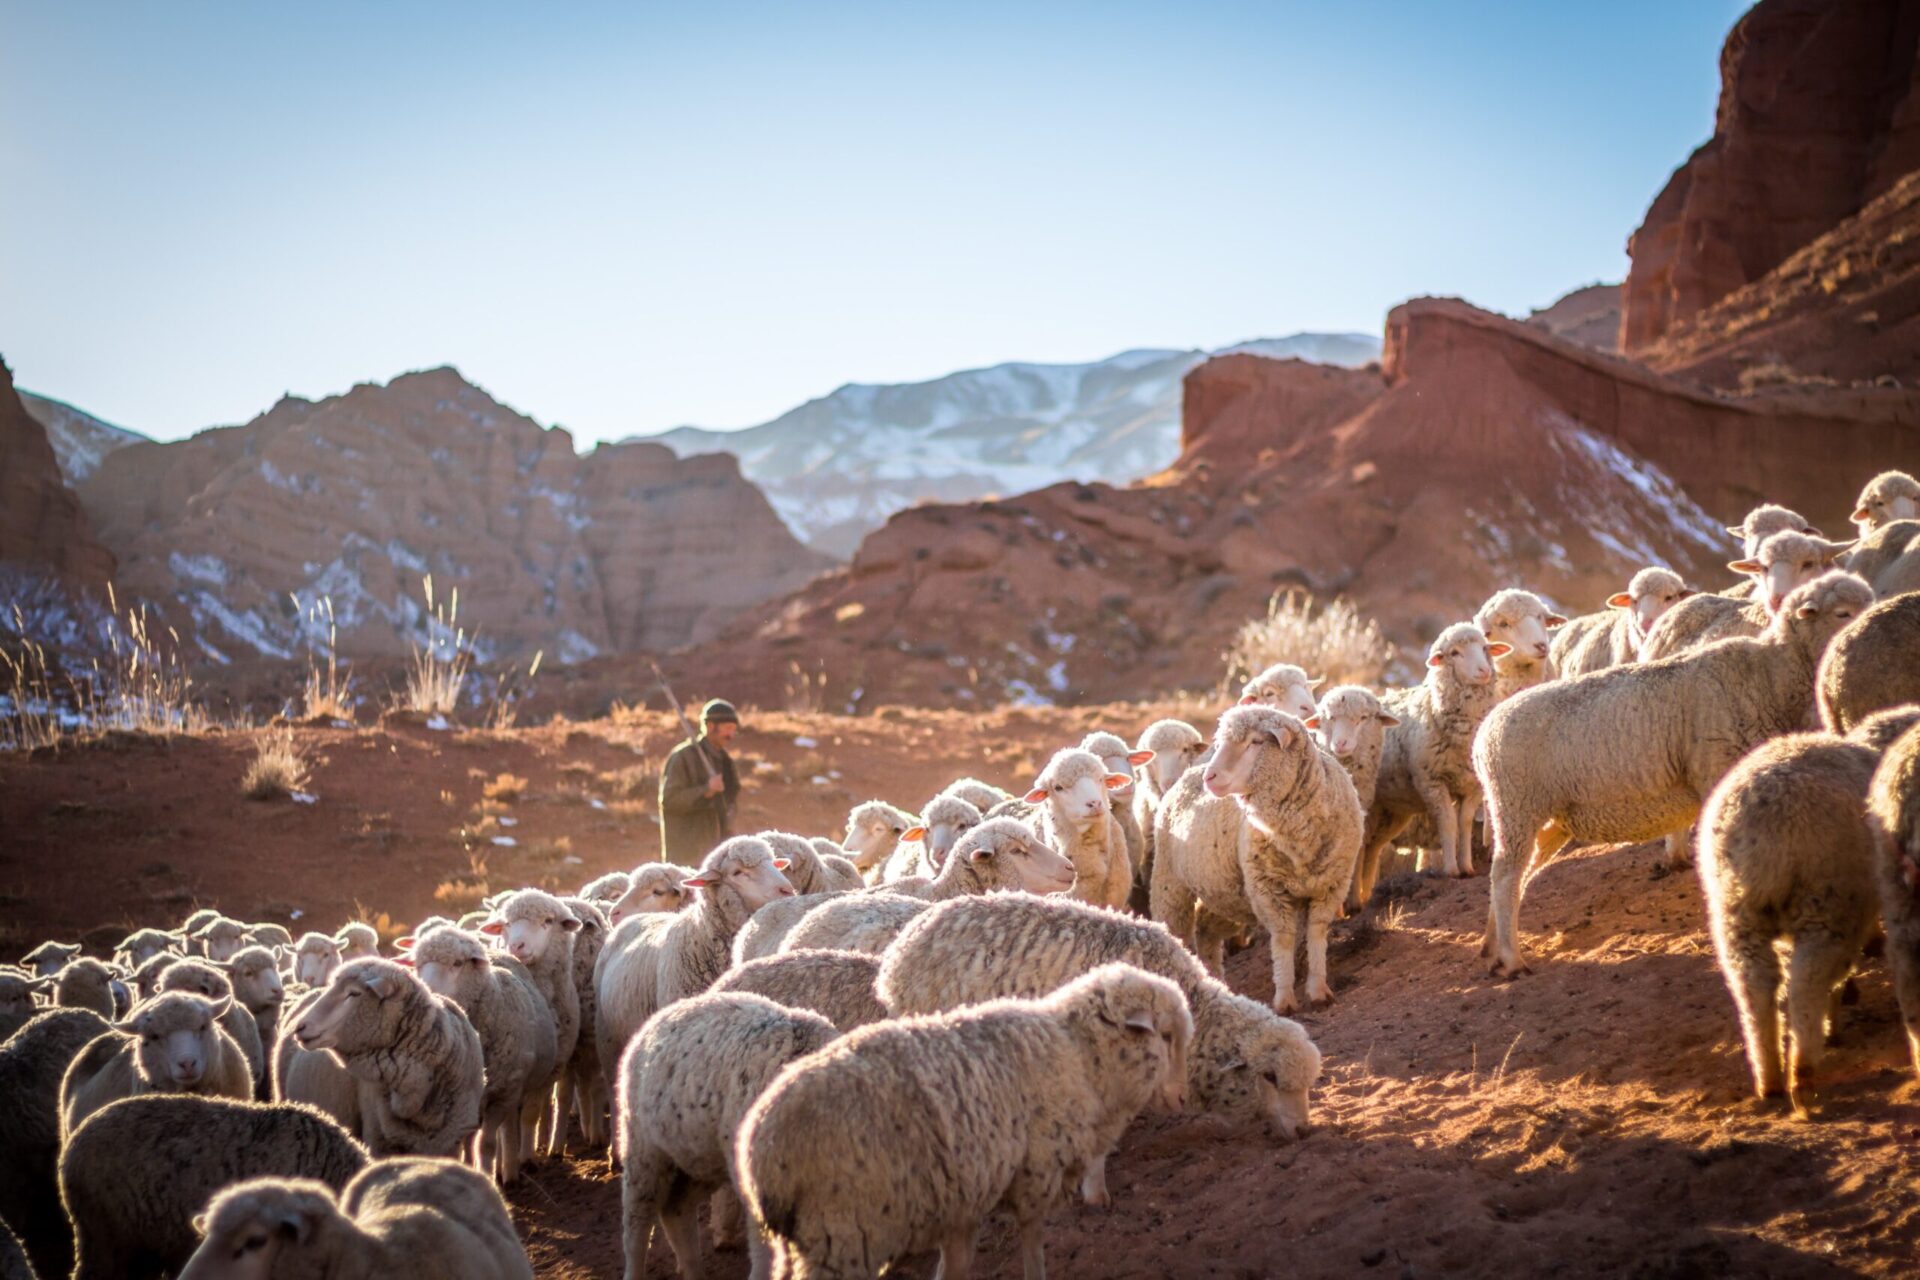 Sheep grazing in Kyrkyzstan Credit:Patrick Schneider on Unsplash